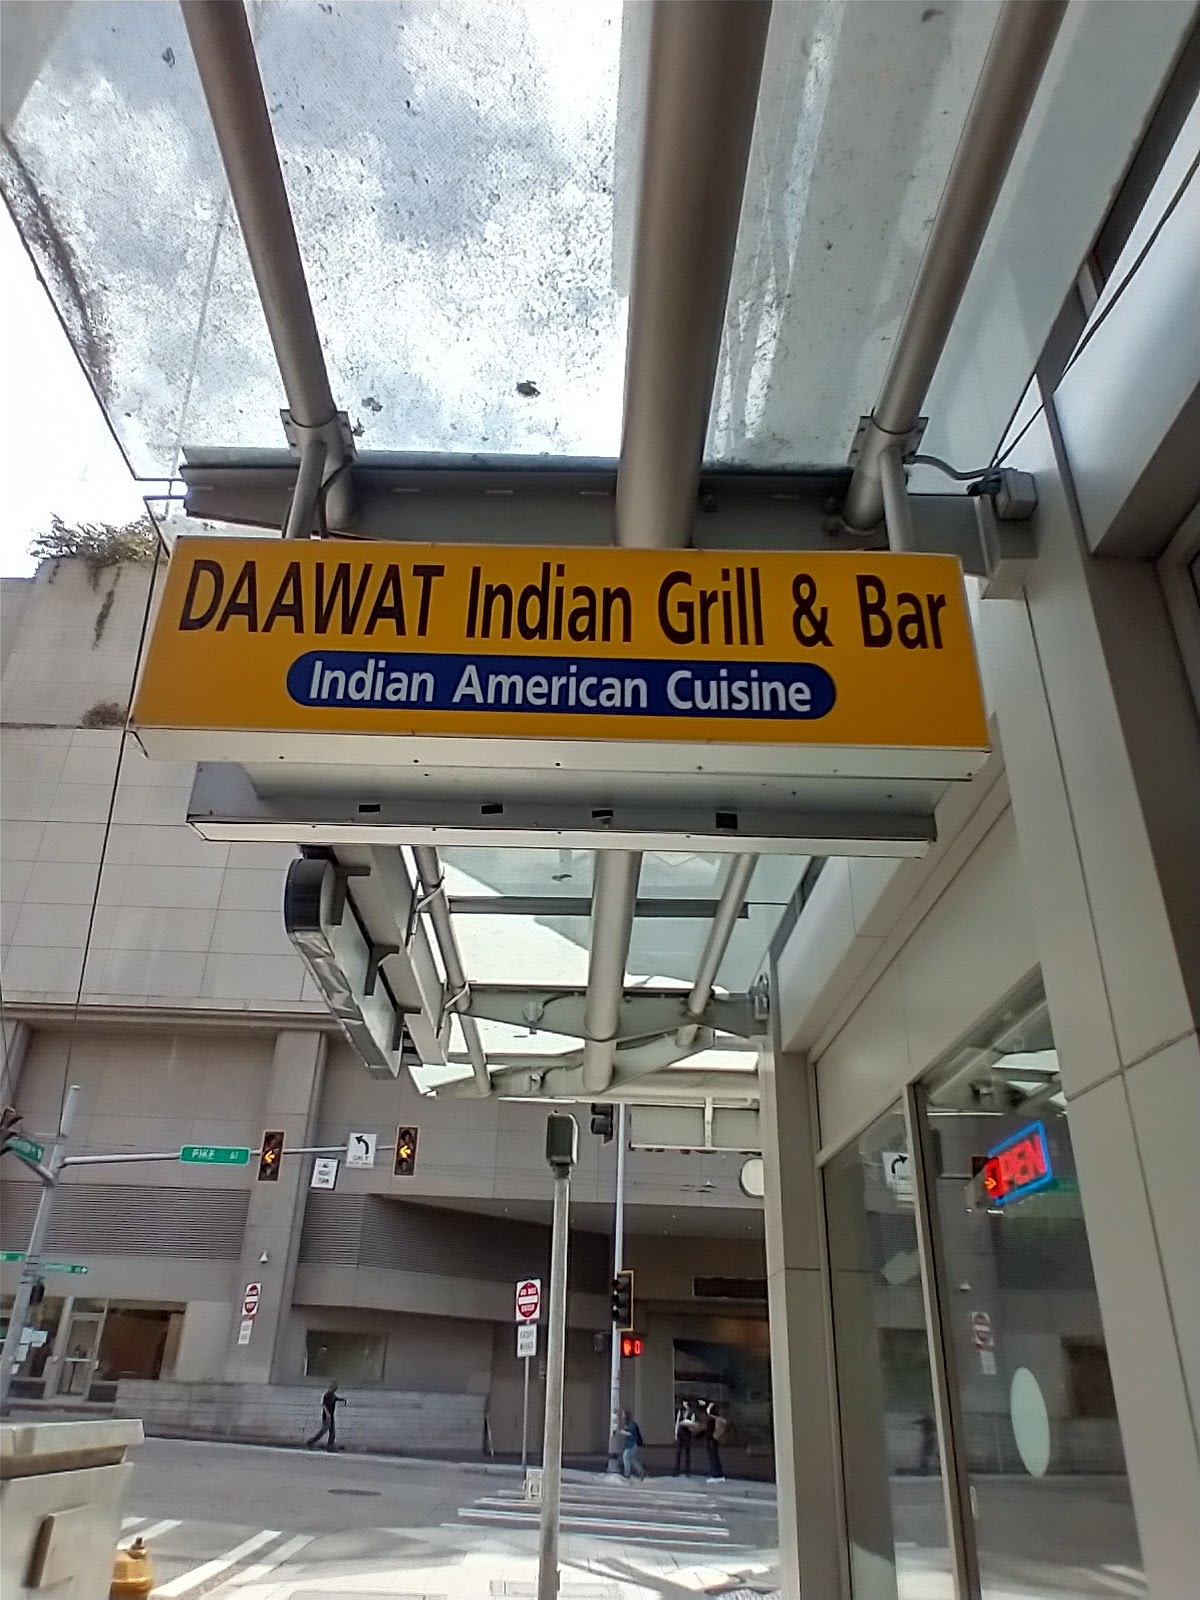 Daawat Indian Grill & Bar